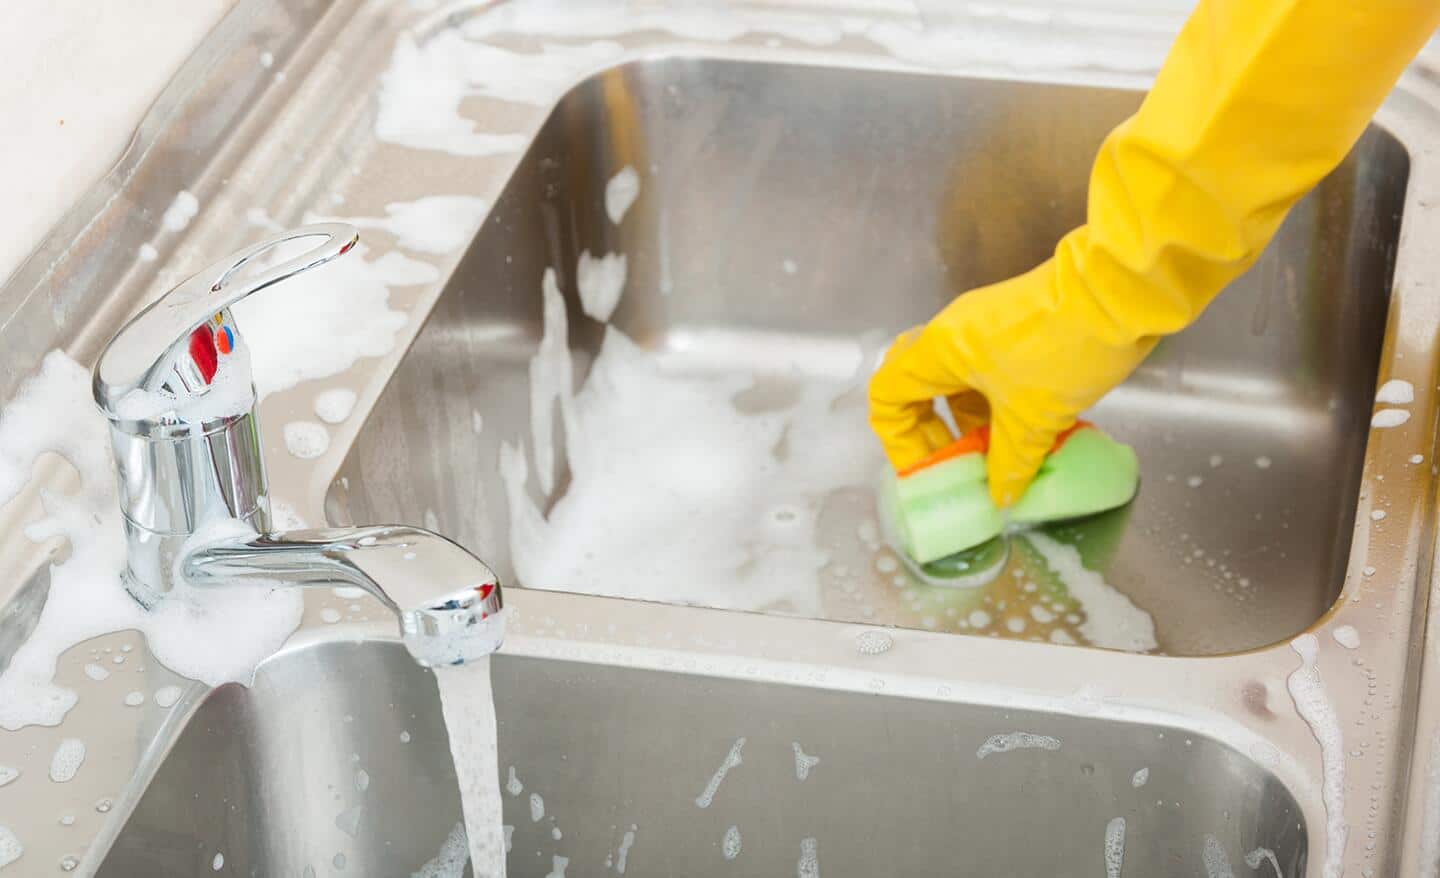 A person scrubs a kitchen sink with a sponge.